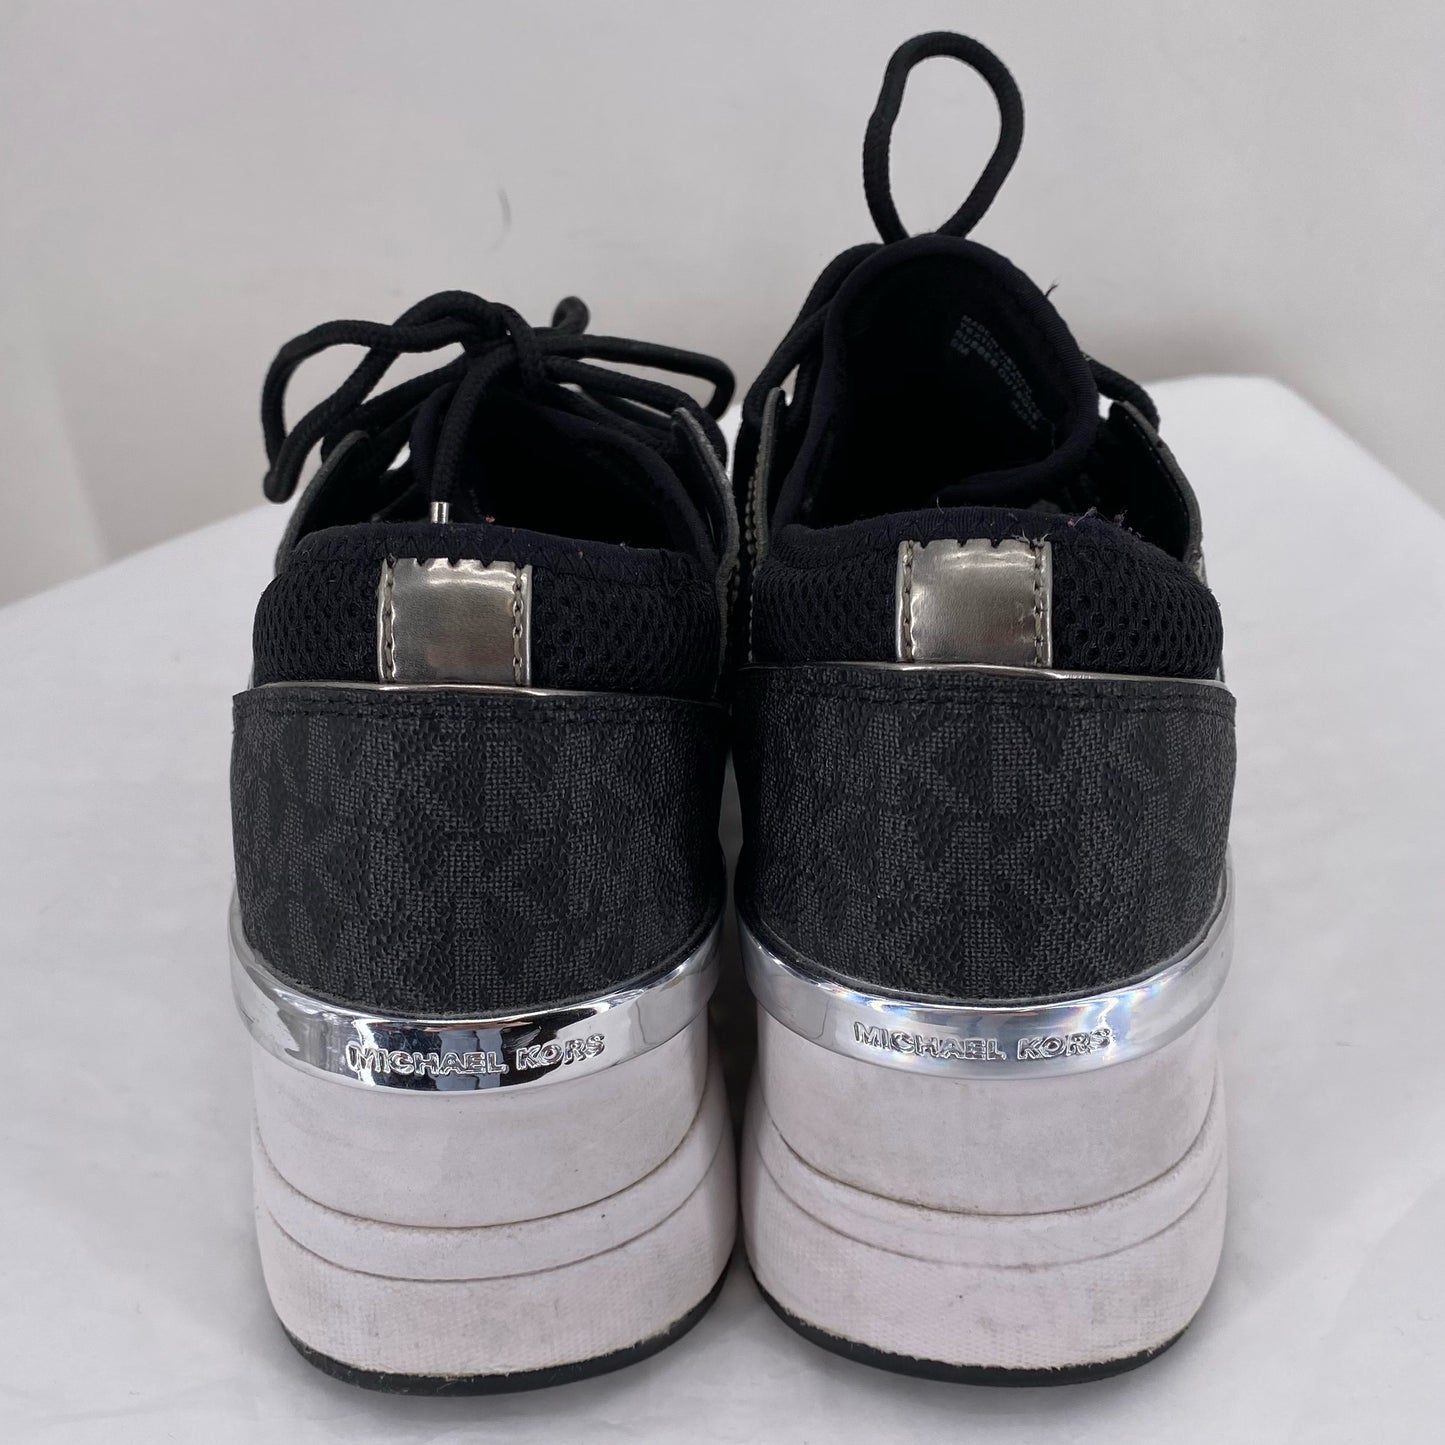 Black W Shoe Size 9 MICHAEL KORS Sneakers